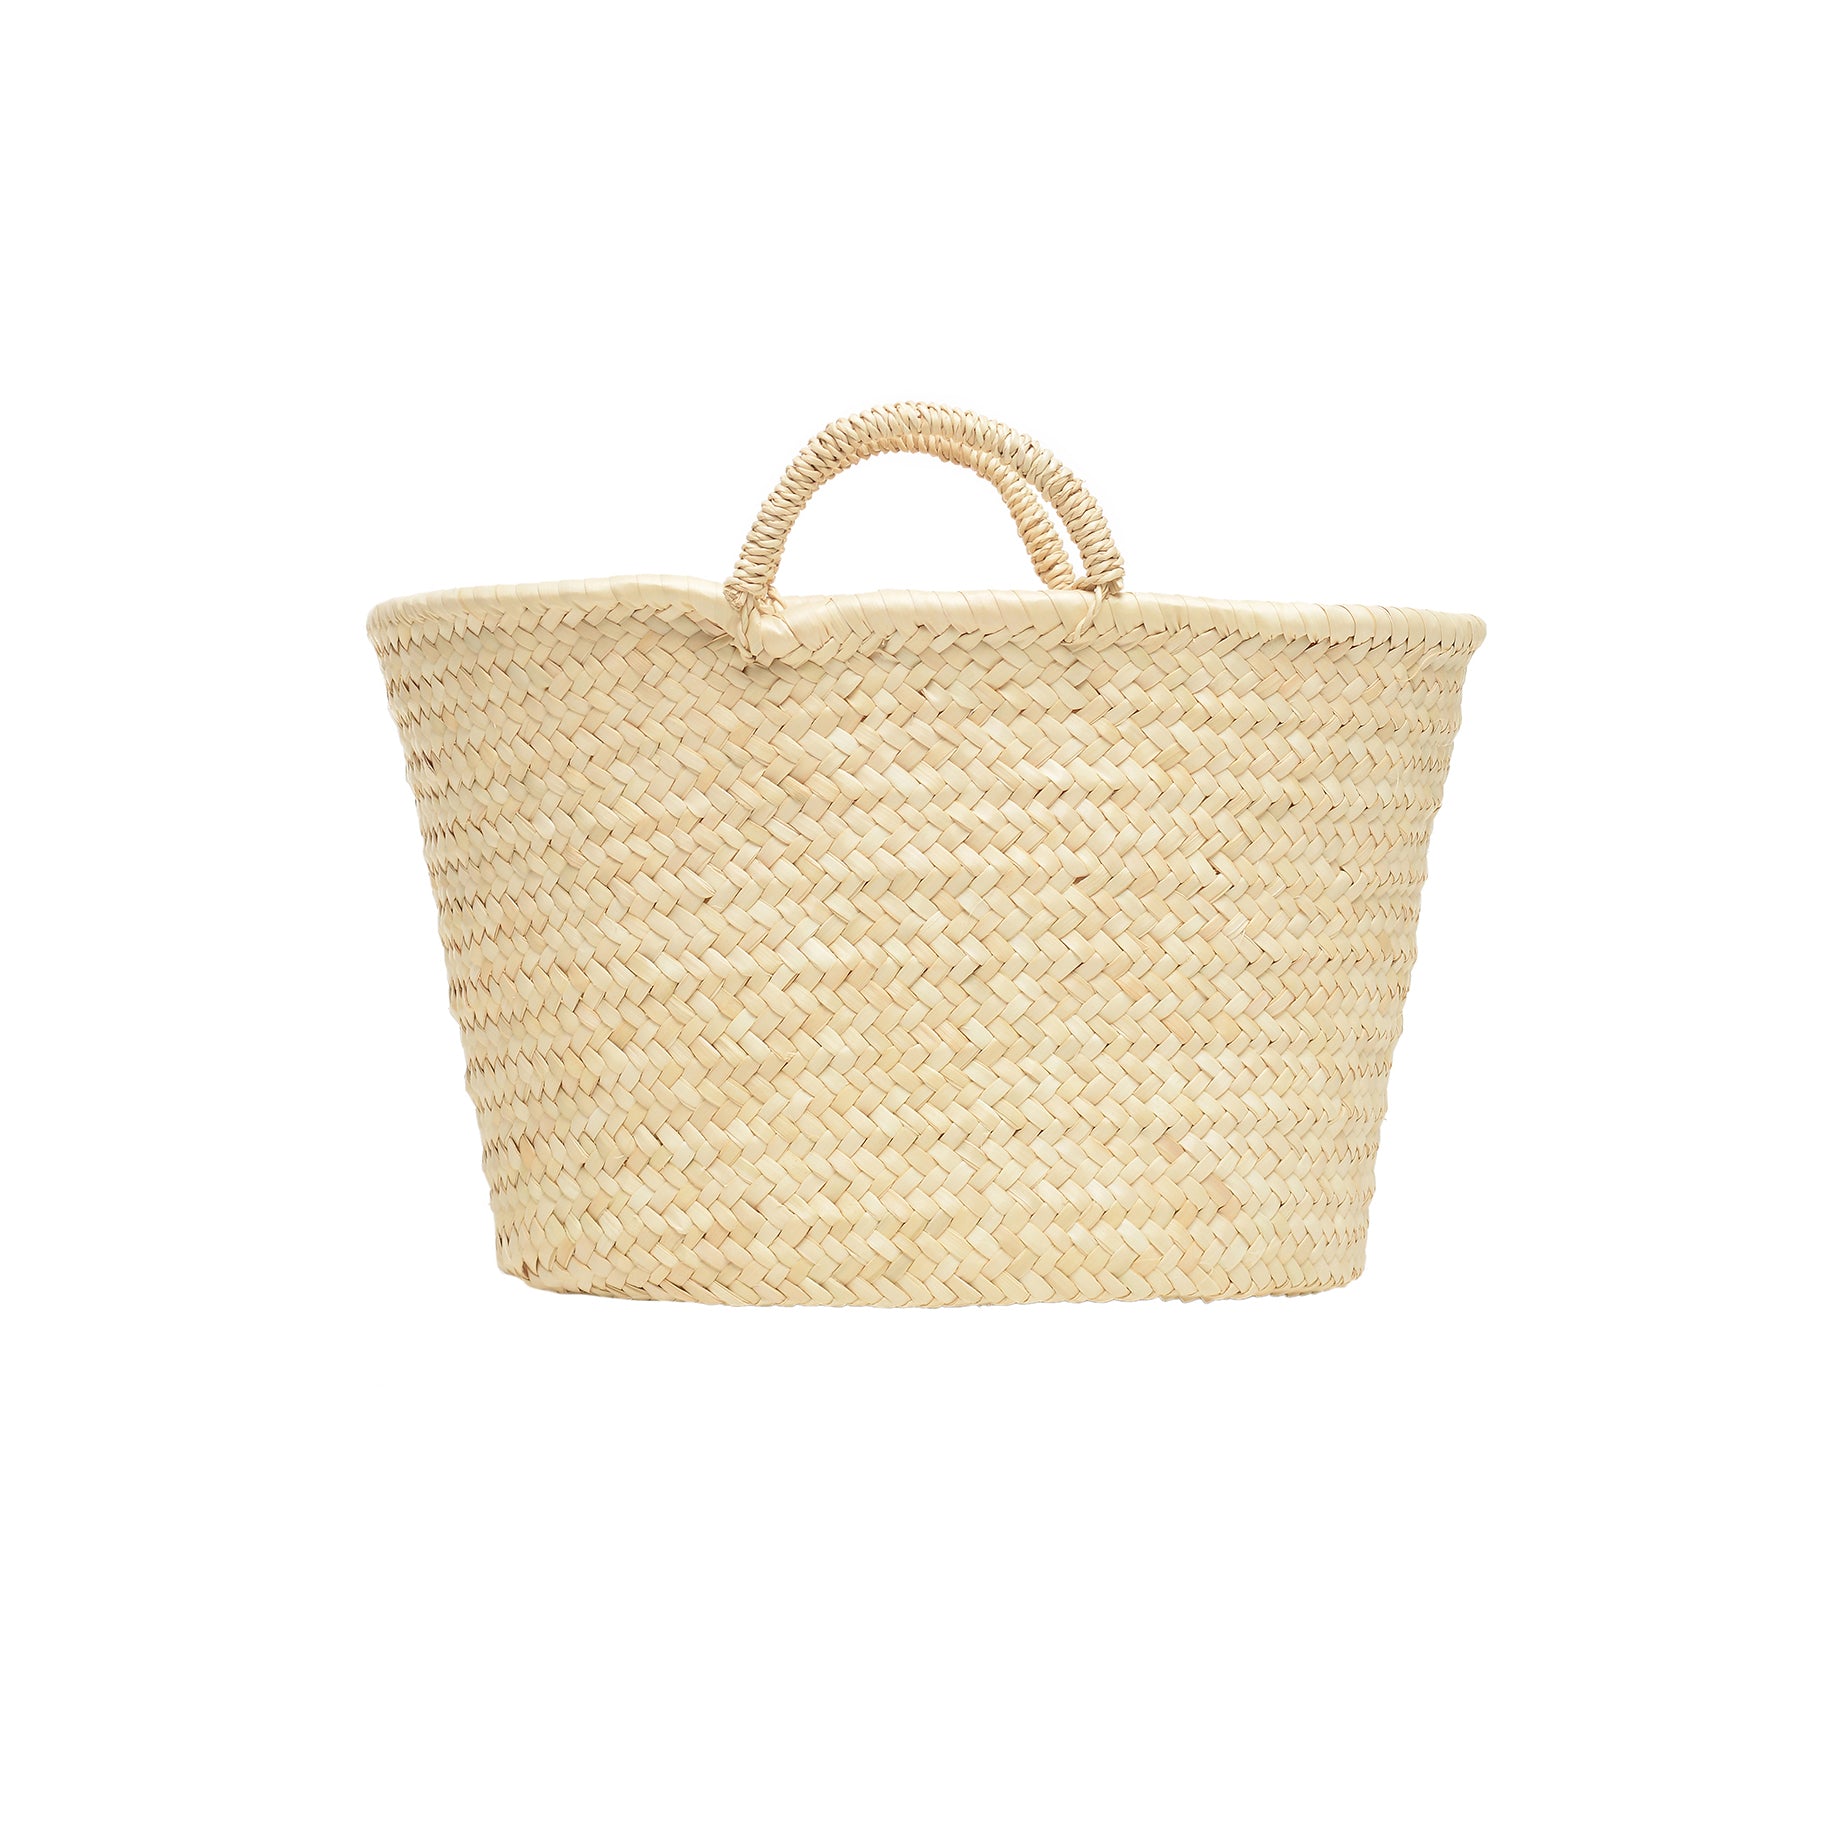 EXCLUSIVE small Mallorcan basket